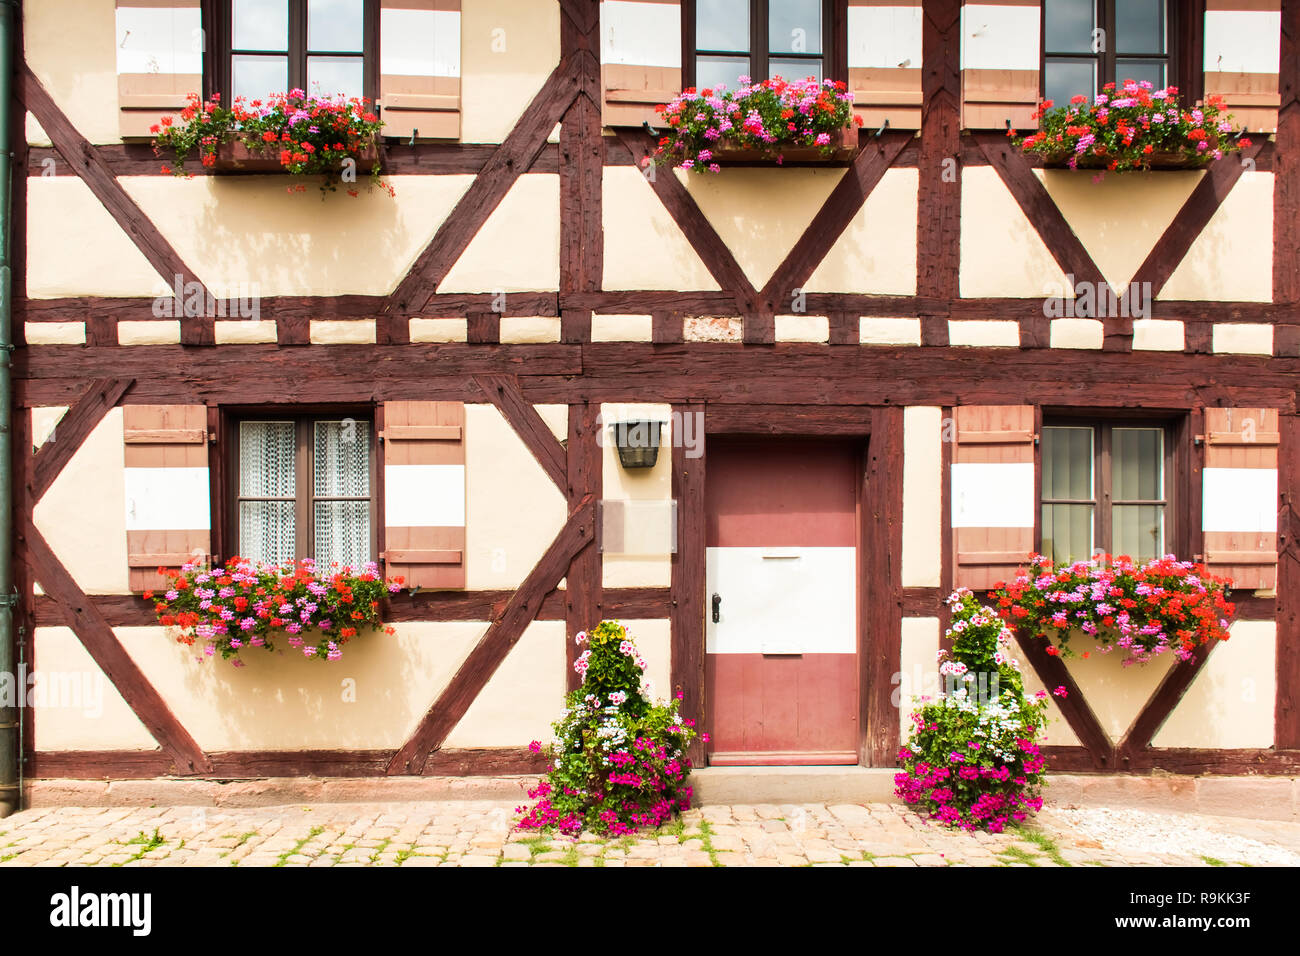 Beatuful wondows and doors architecture of Nuremberg buildings in Germany Stock Photo